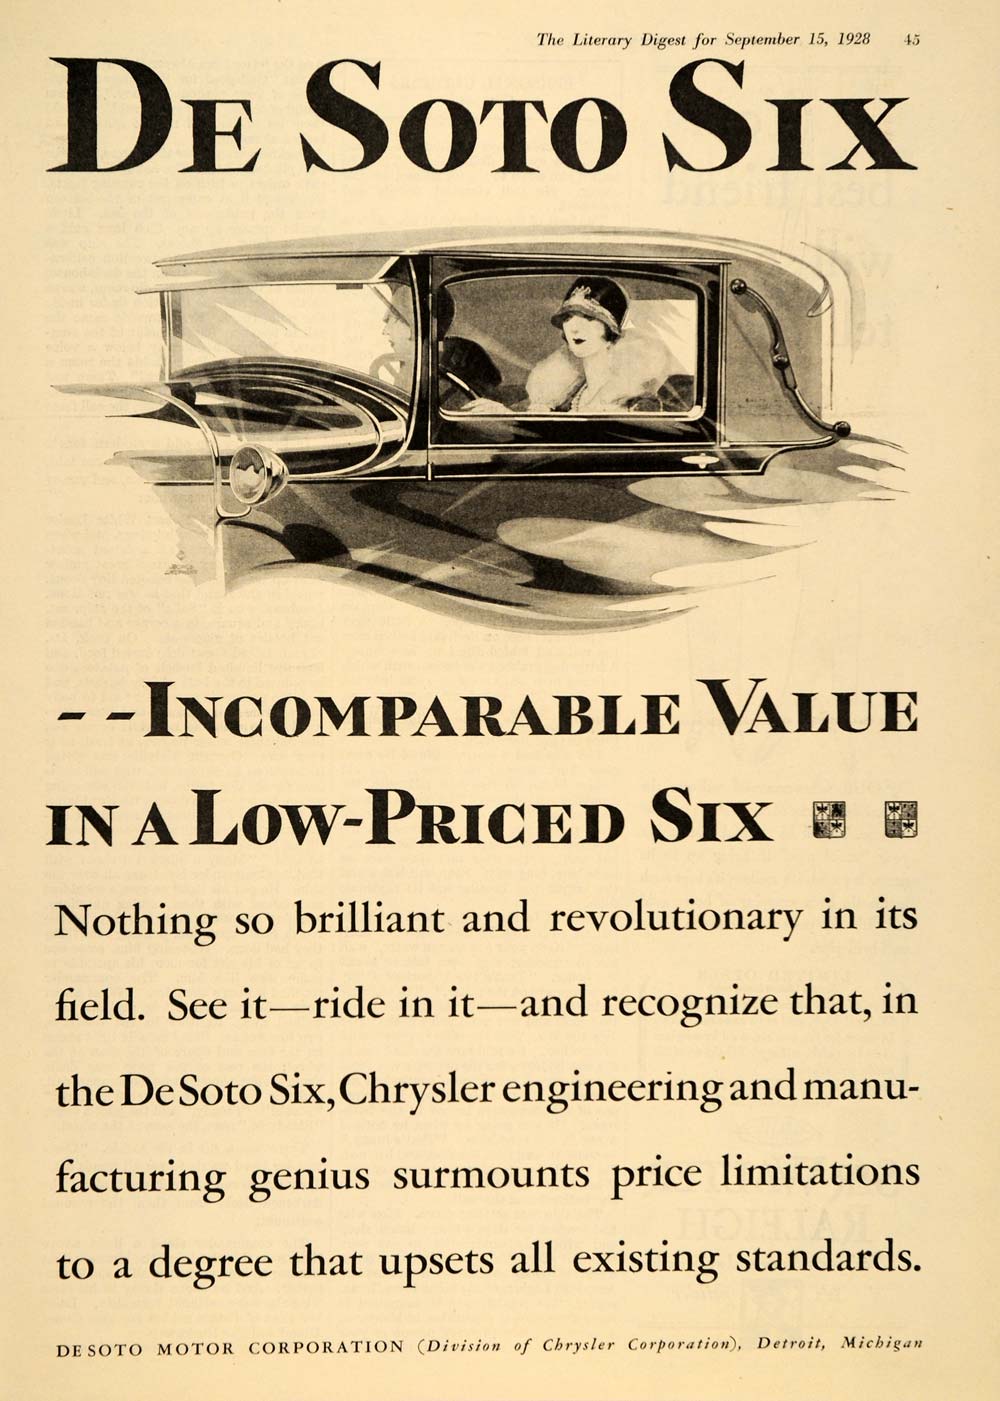 1928 Print Ad Vintage De Soto Six Sedan Automobile Car - ORIGINAL LD1